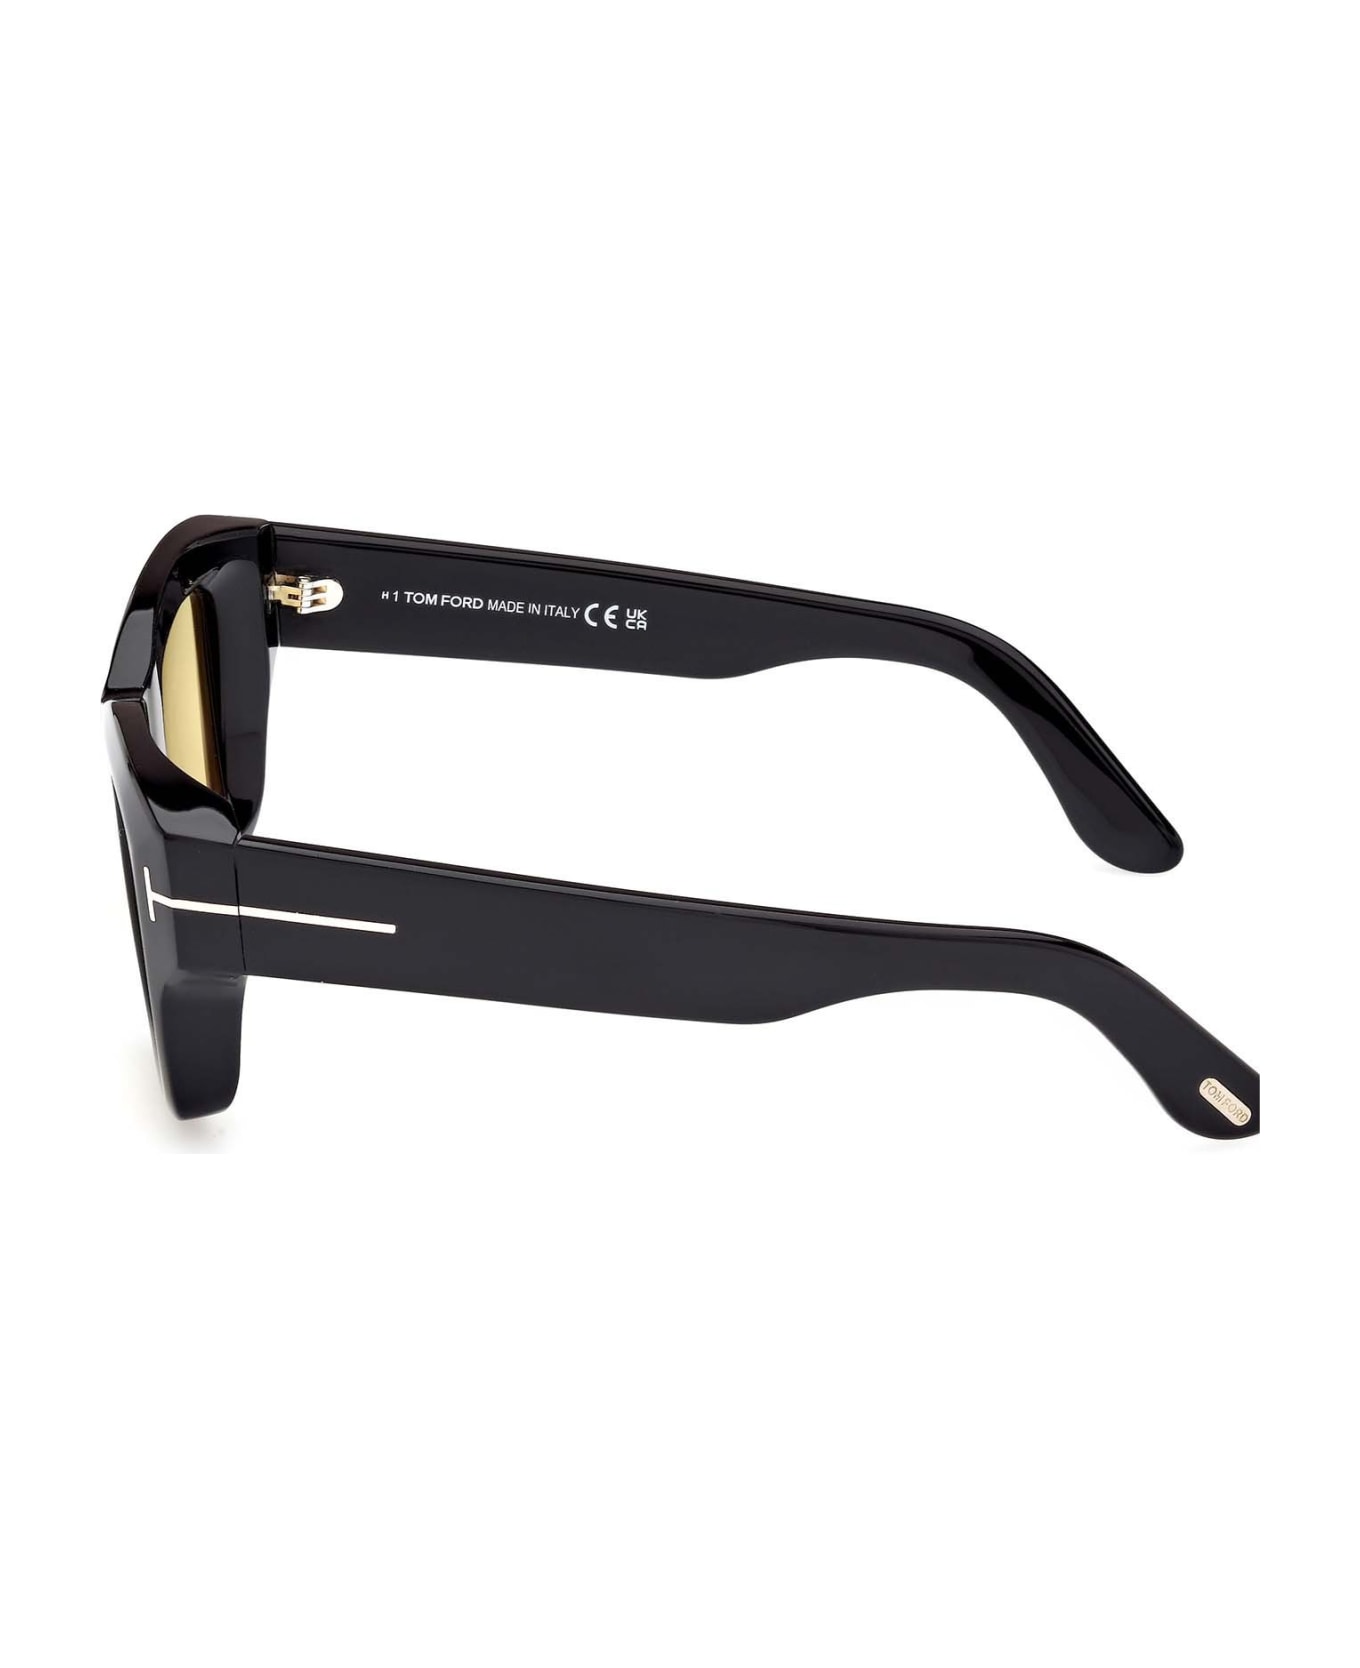 Tom Ford Eyewear Sunglasses - Nero/Marrone